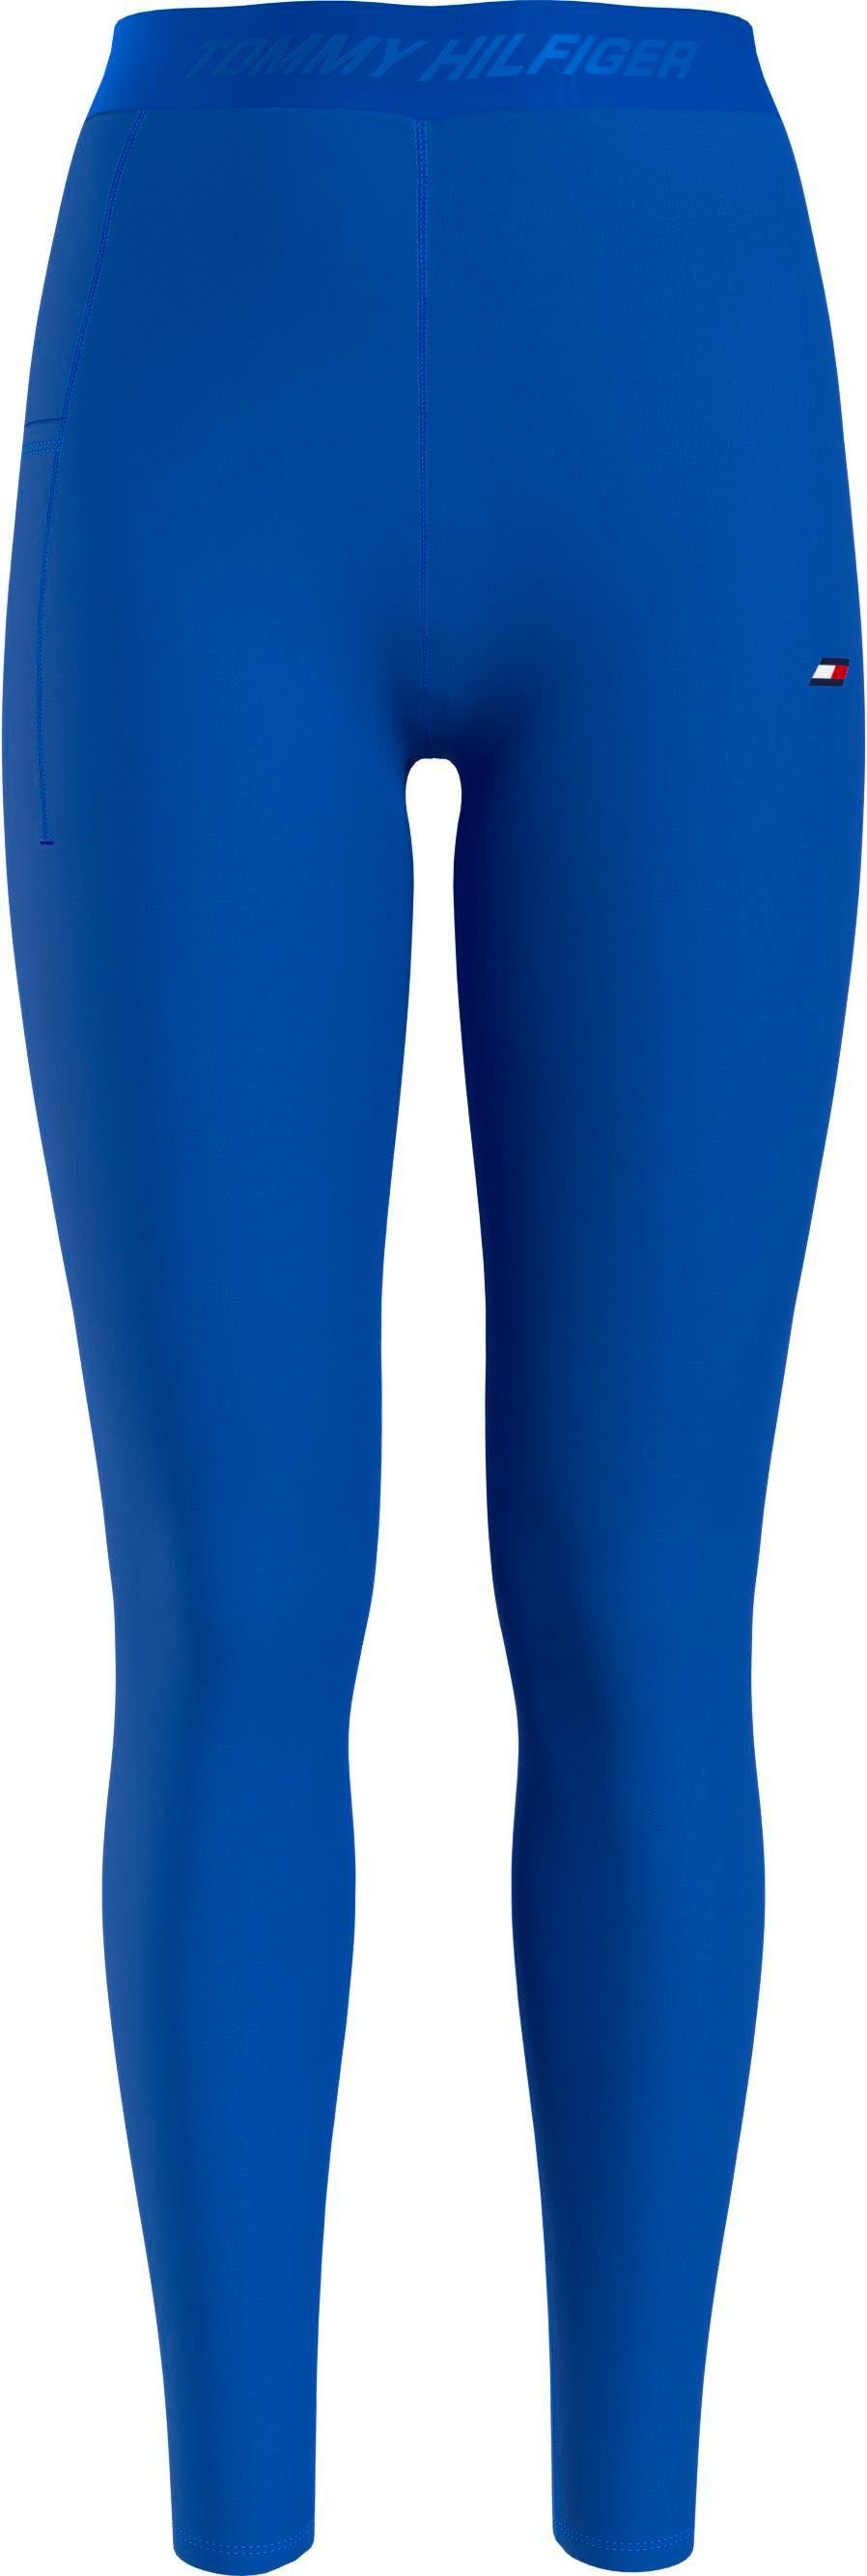 Leggings mit auf BRANDED Hosenbund LEGGING royalblau Schriftzug Tommy HW Tommy Hilfiger ESS dem Hilfiger TAPE Sport